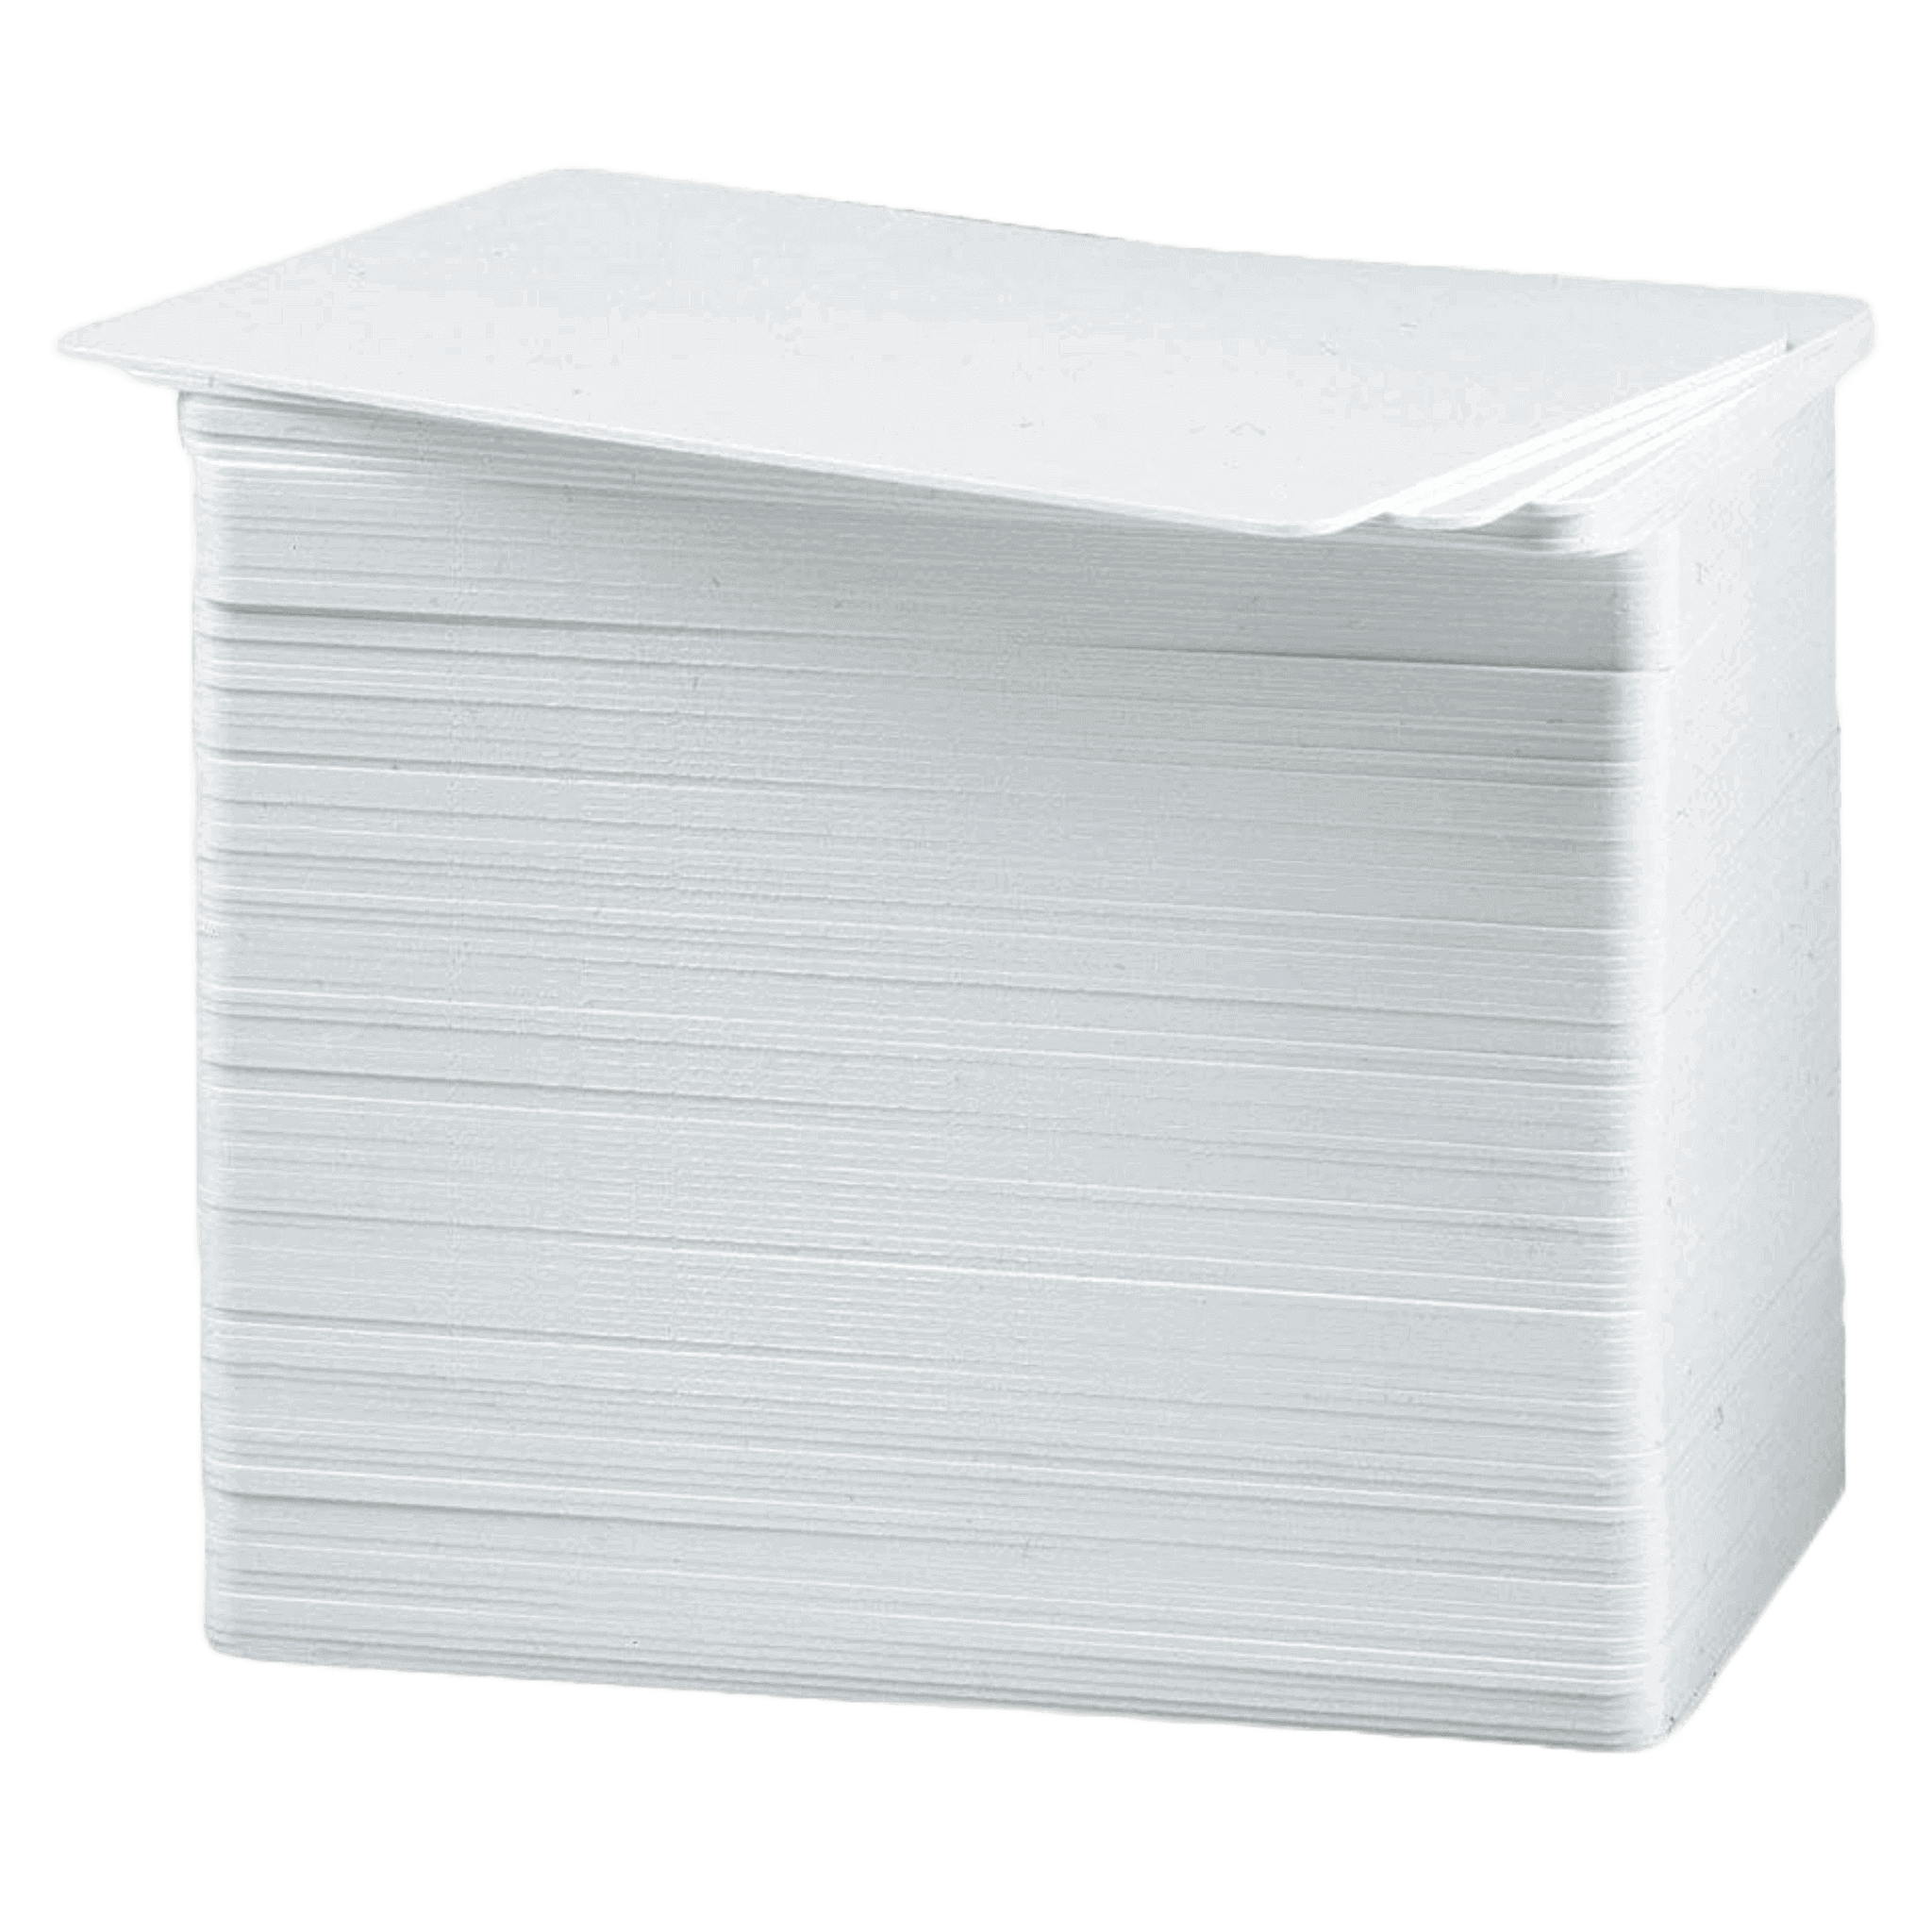 Evolis Paper Cards, 500 Pack